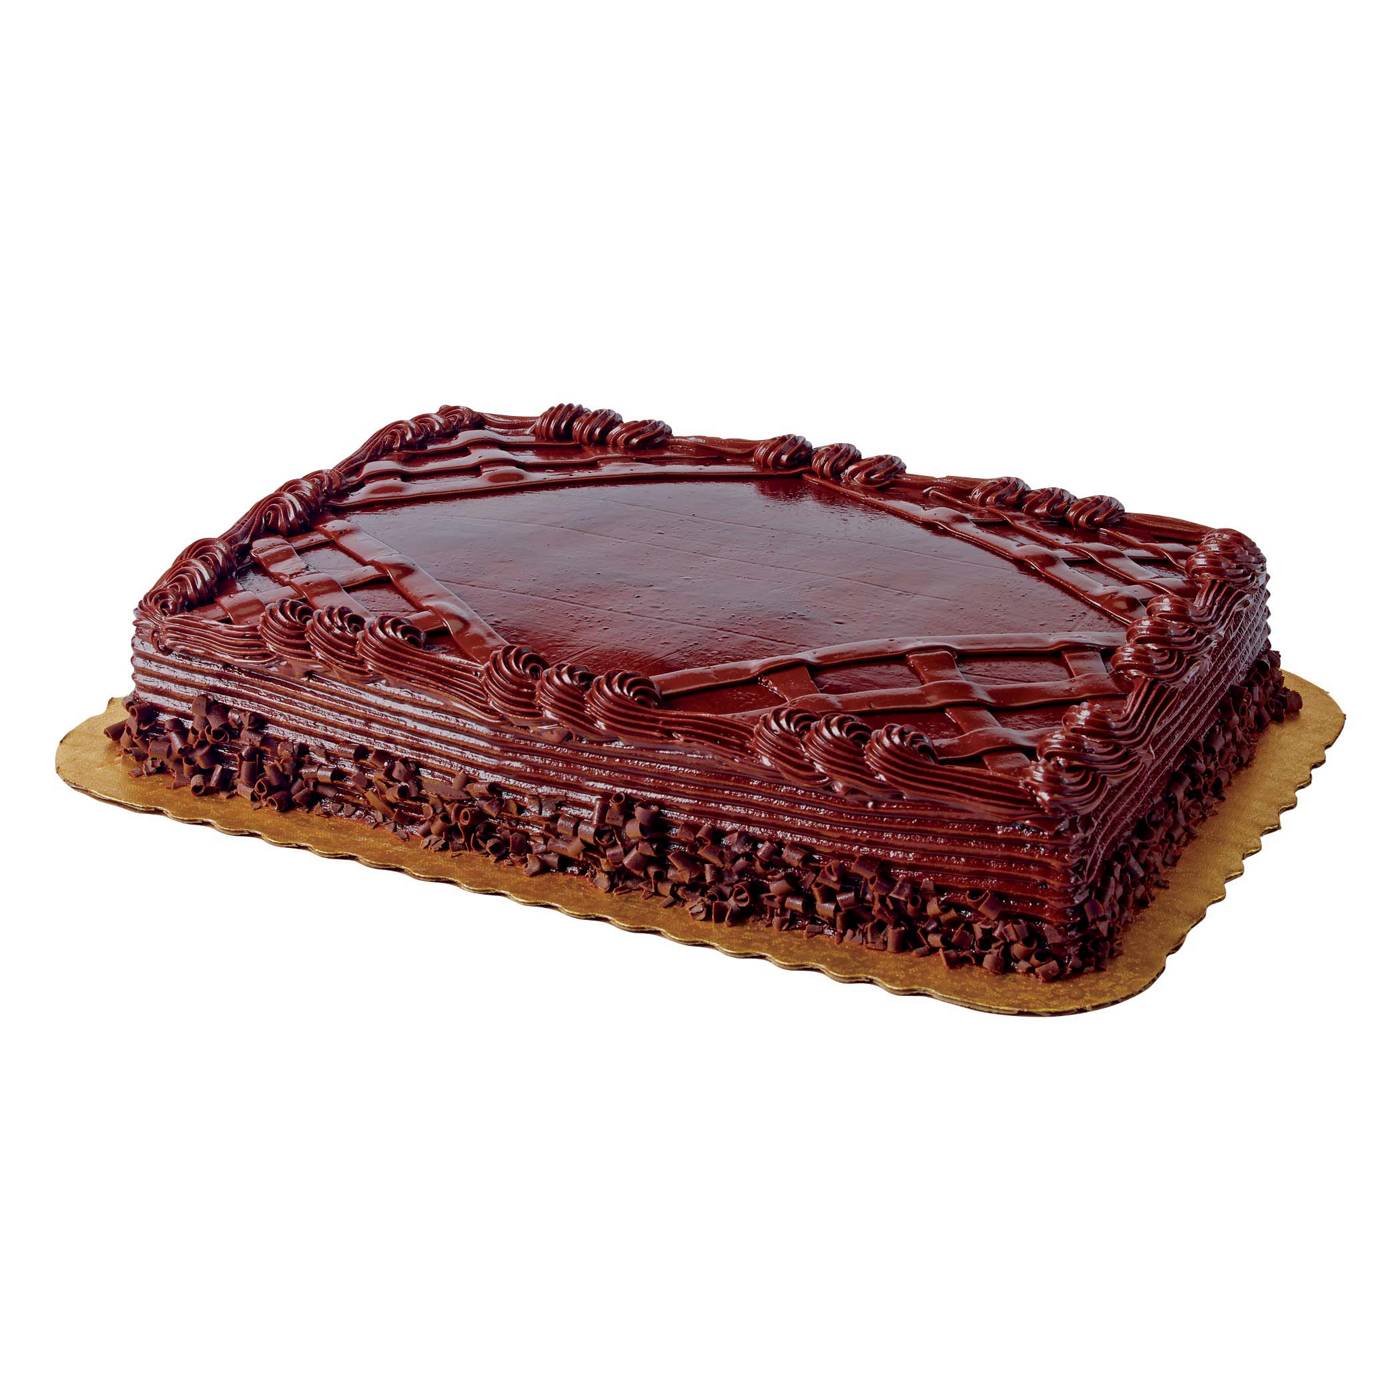 H-E-B Bakery Chocolate Fudge Cake; image 1 of 2